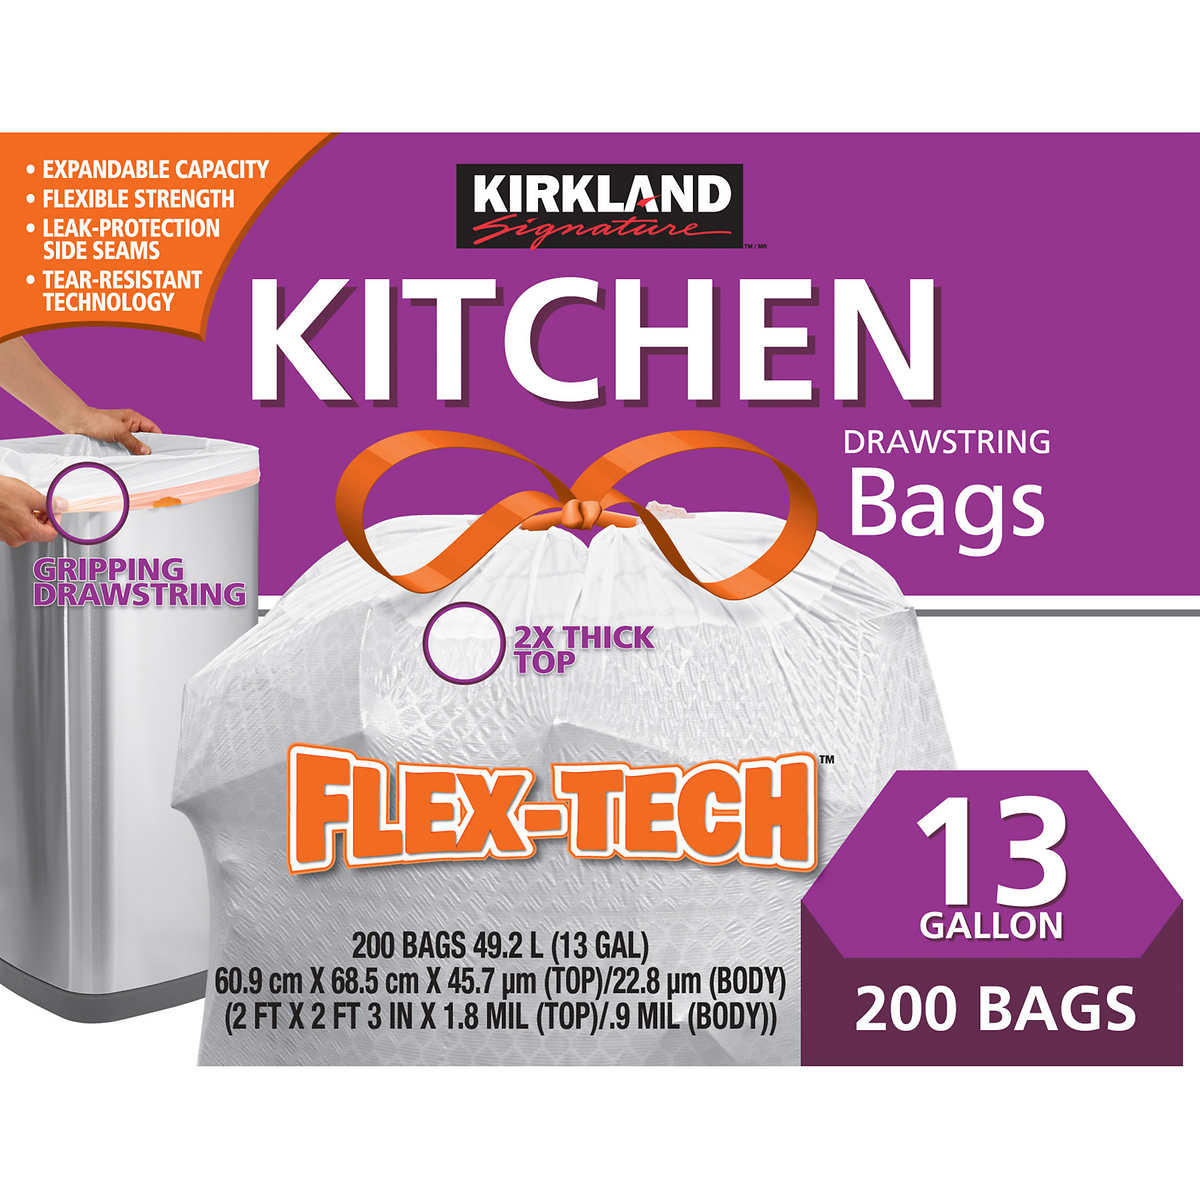 Kirkland Signature Flex-Tech 13-Gallon Kitchen Trash Bag 200-Count